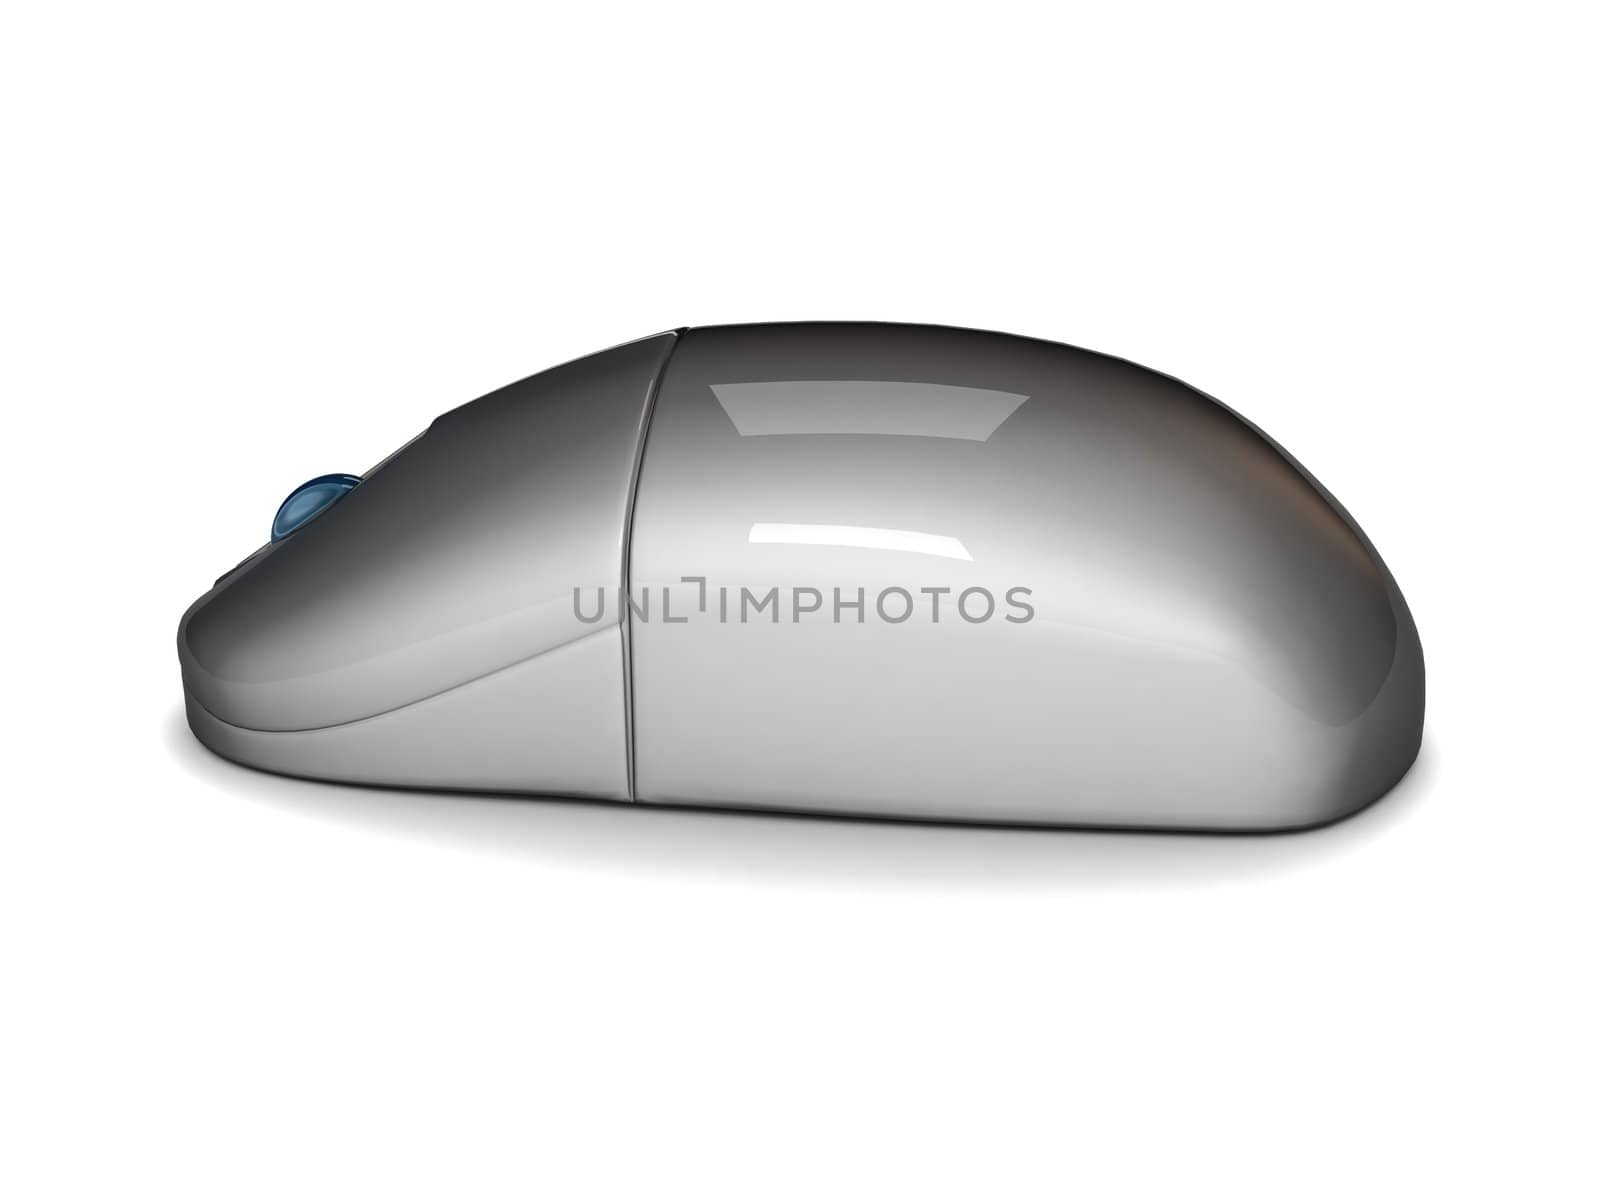 electronic mouse by imagerymajestic